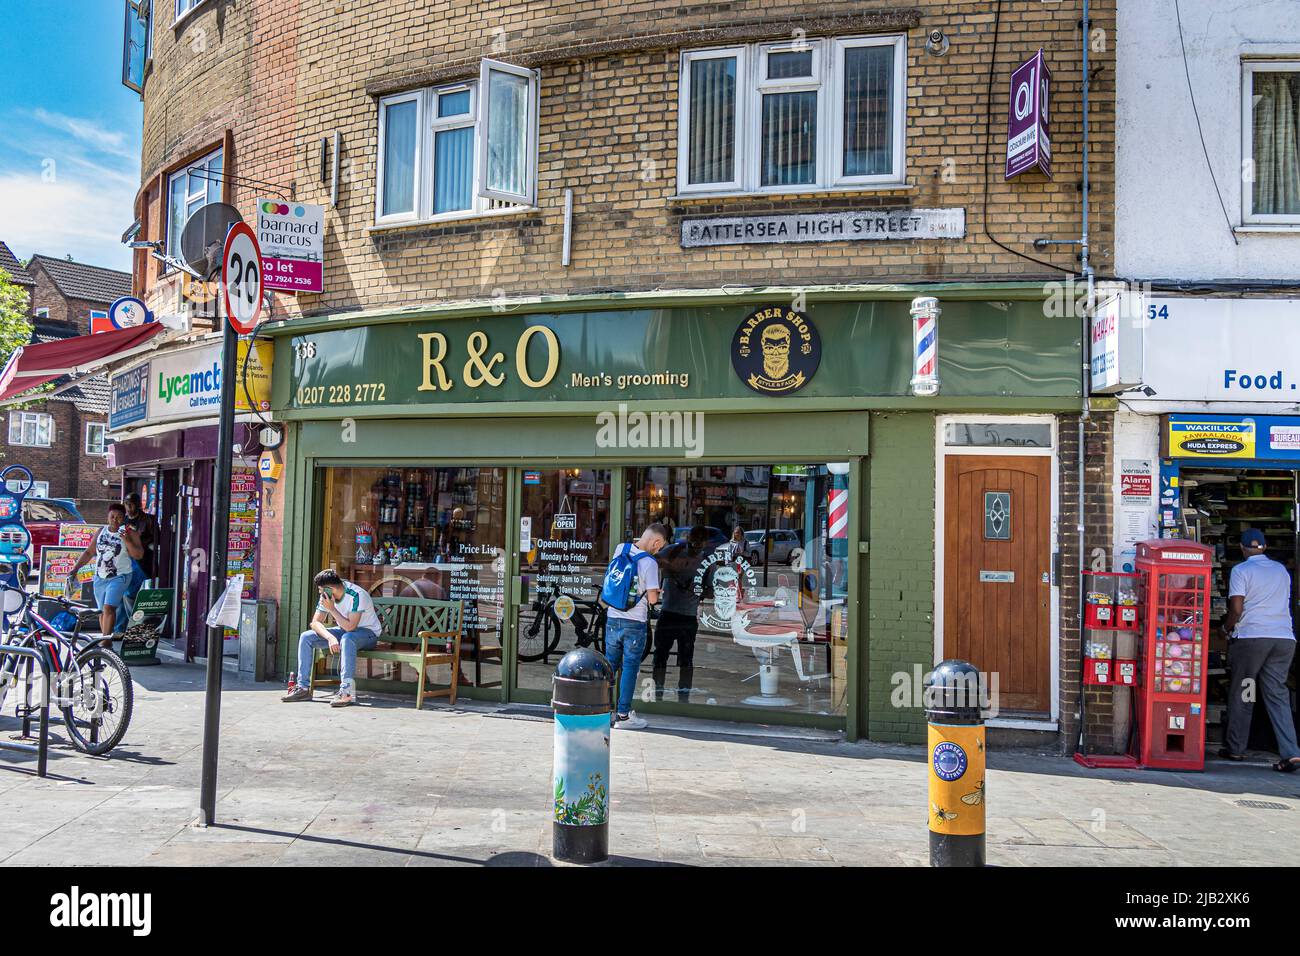 Tienda de barberos de R&O en Battersea High Street, Battersea, Londres , SW11 Foto de stock